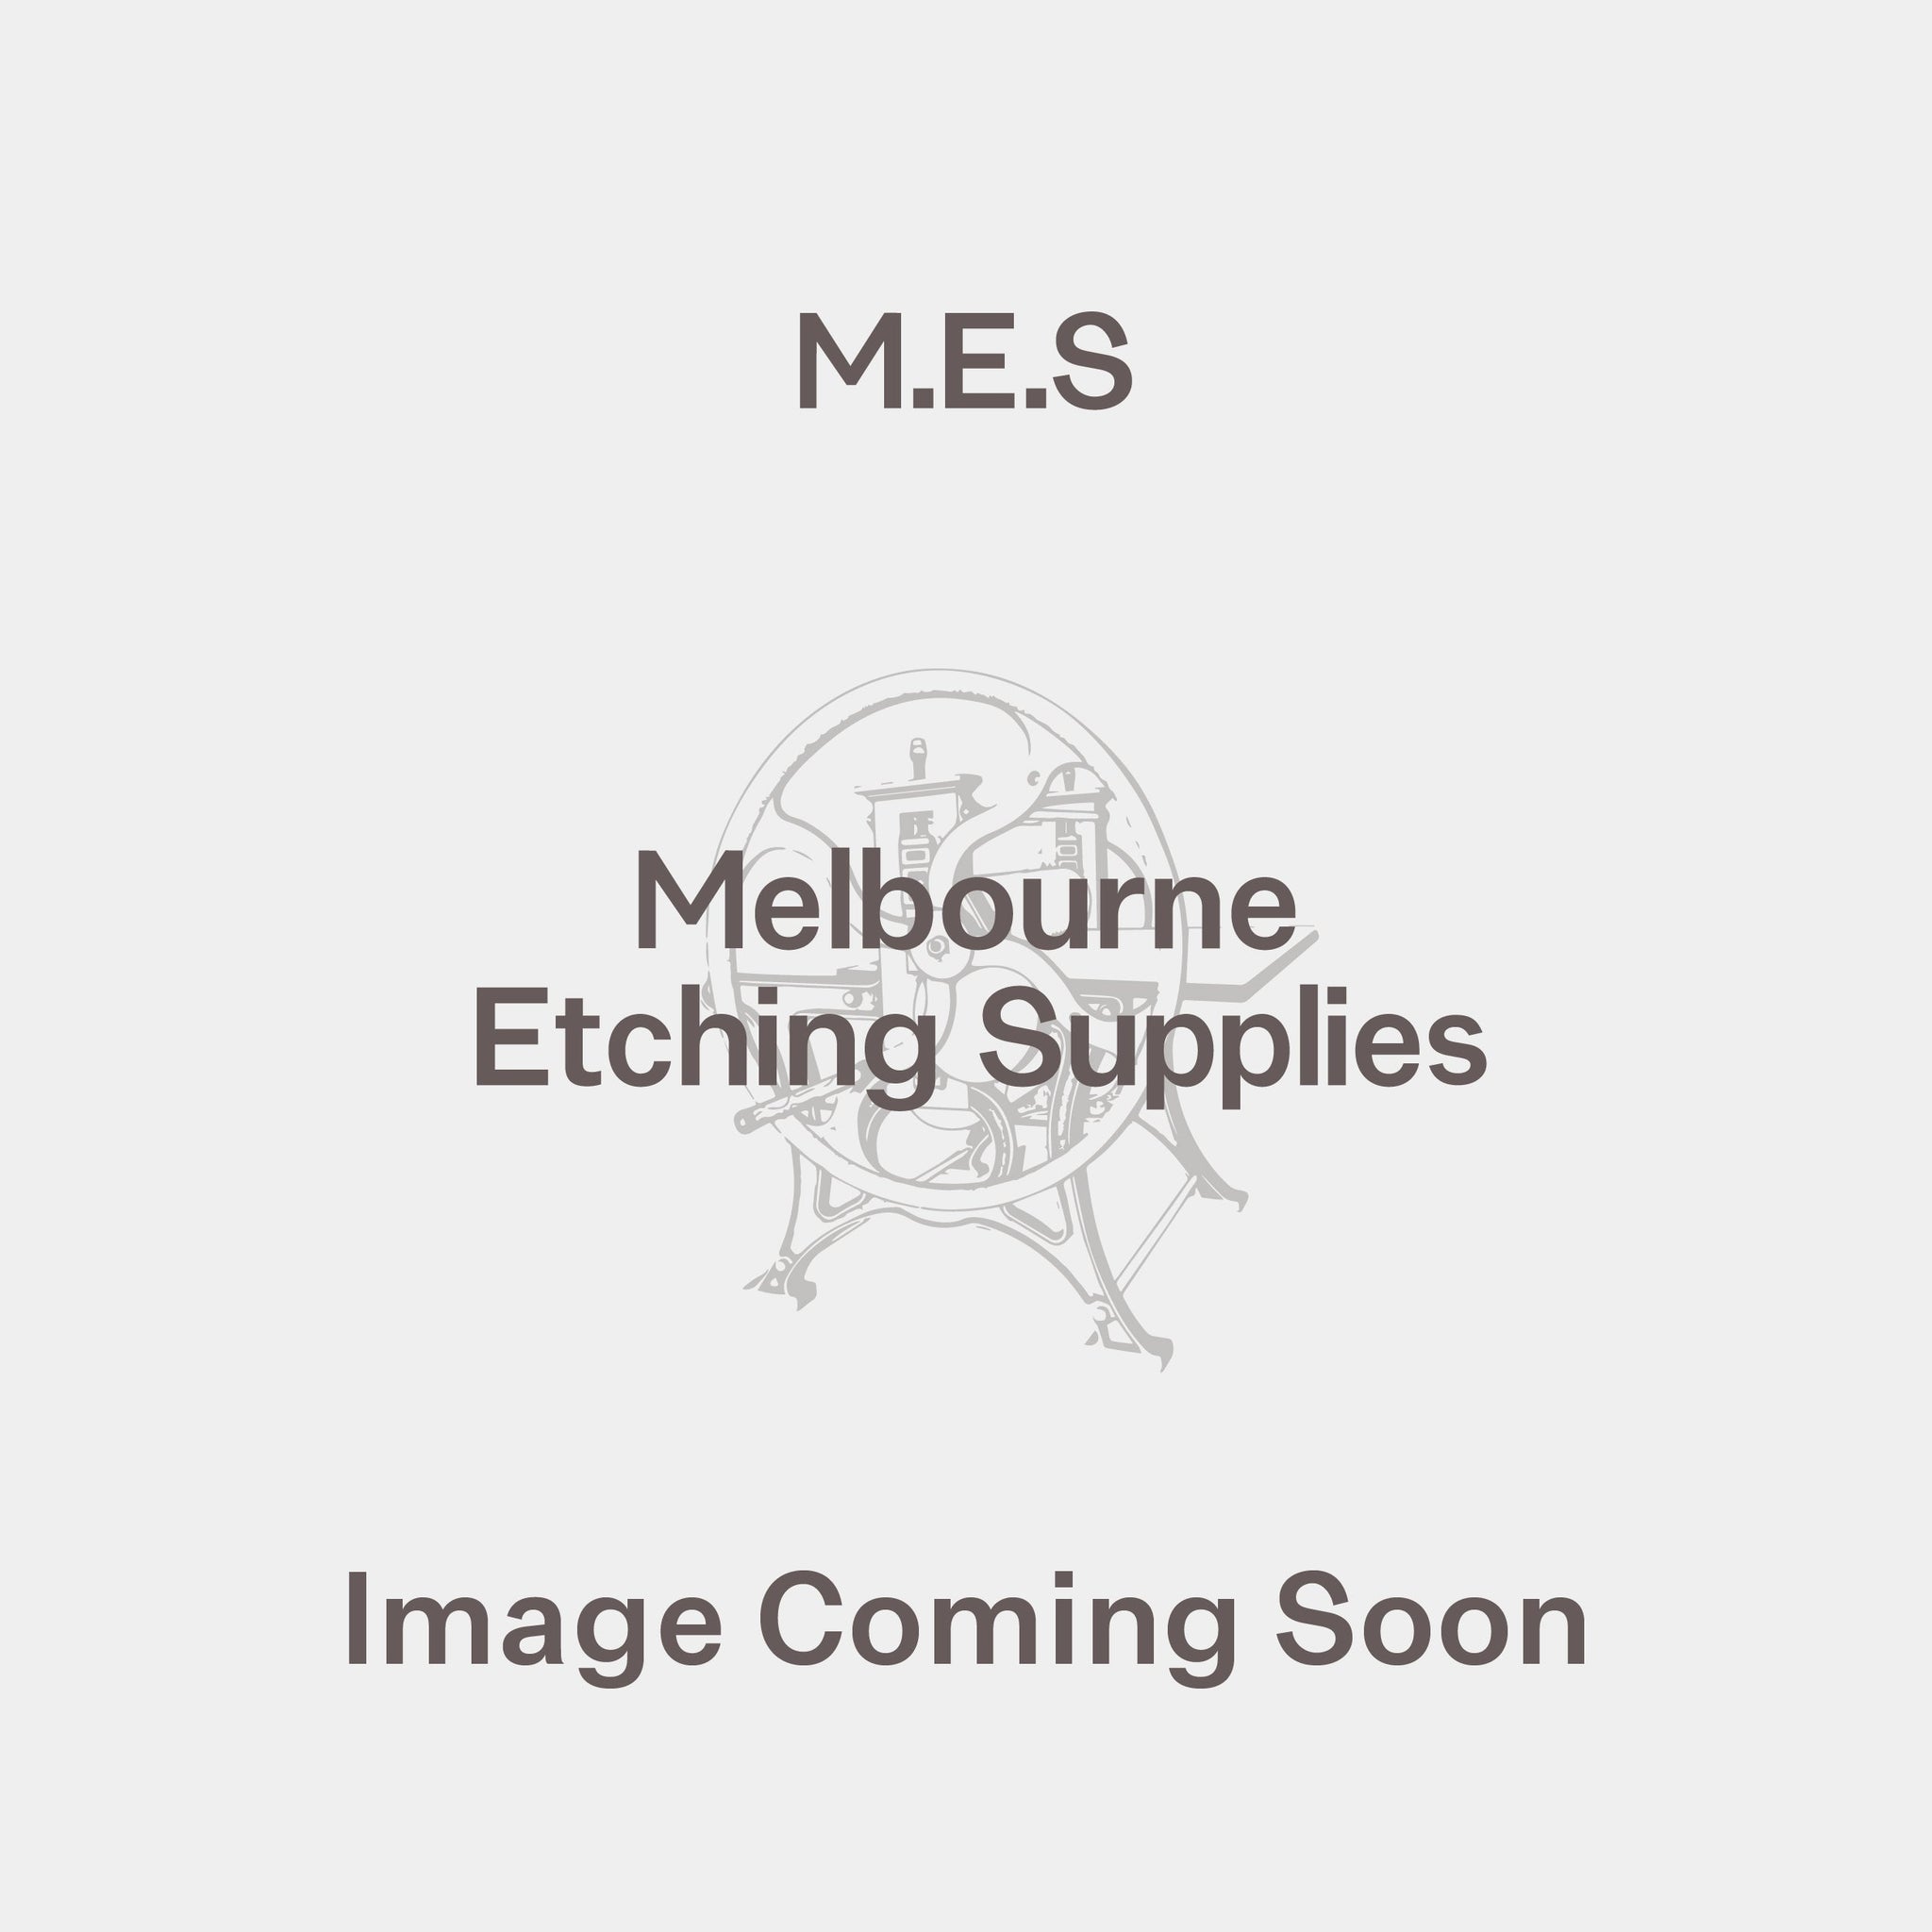 Gampishi - Melbourne Etching Supplies